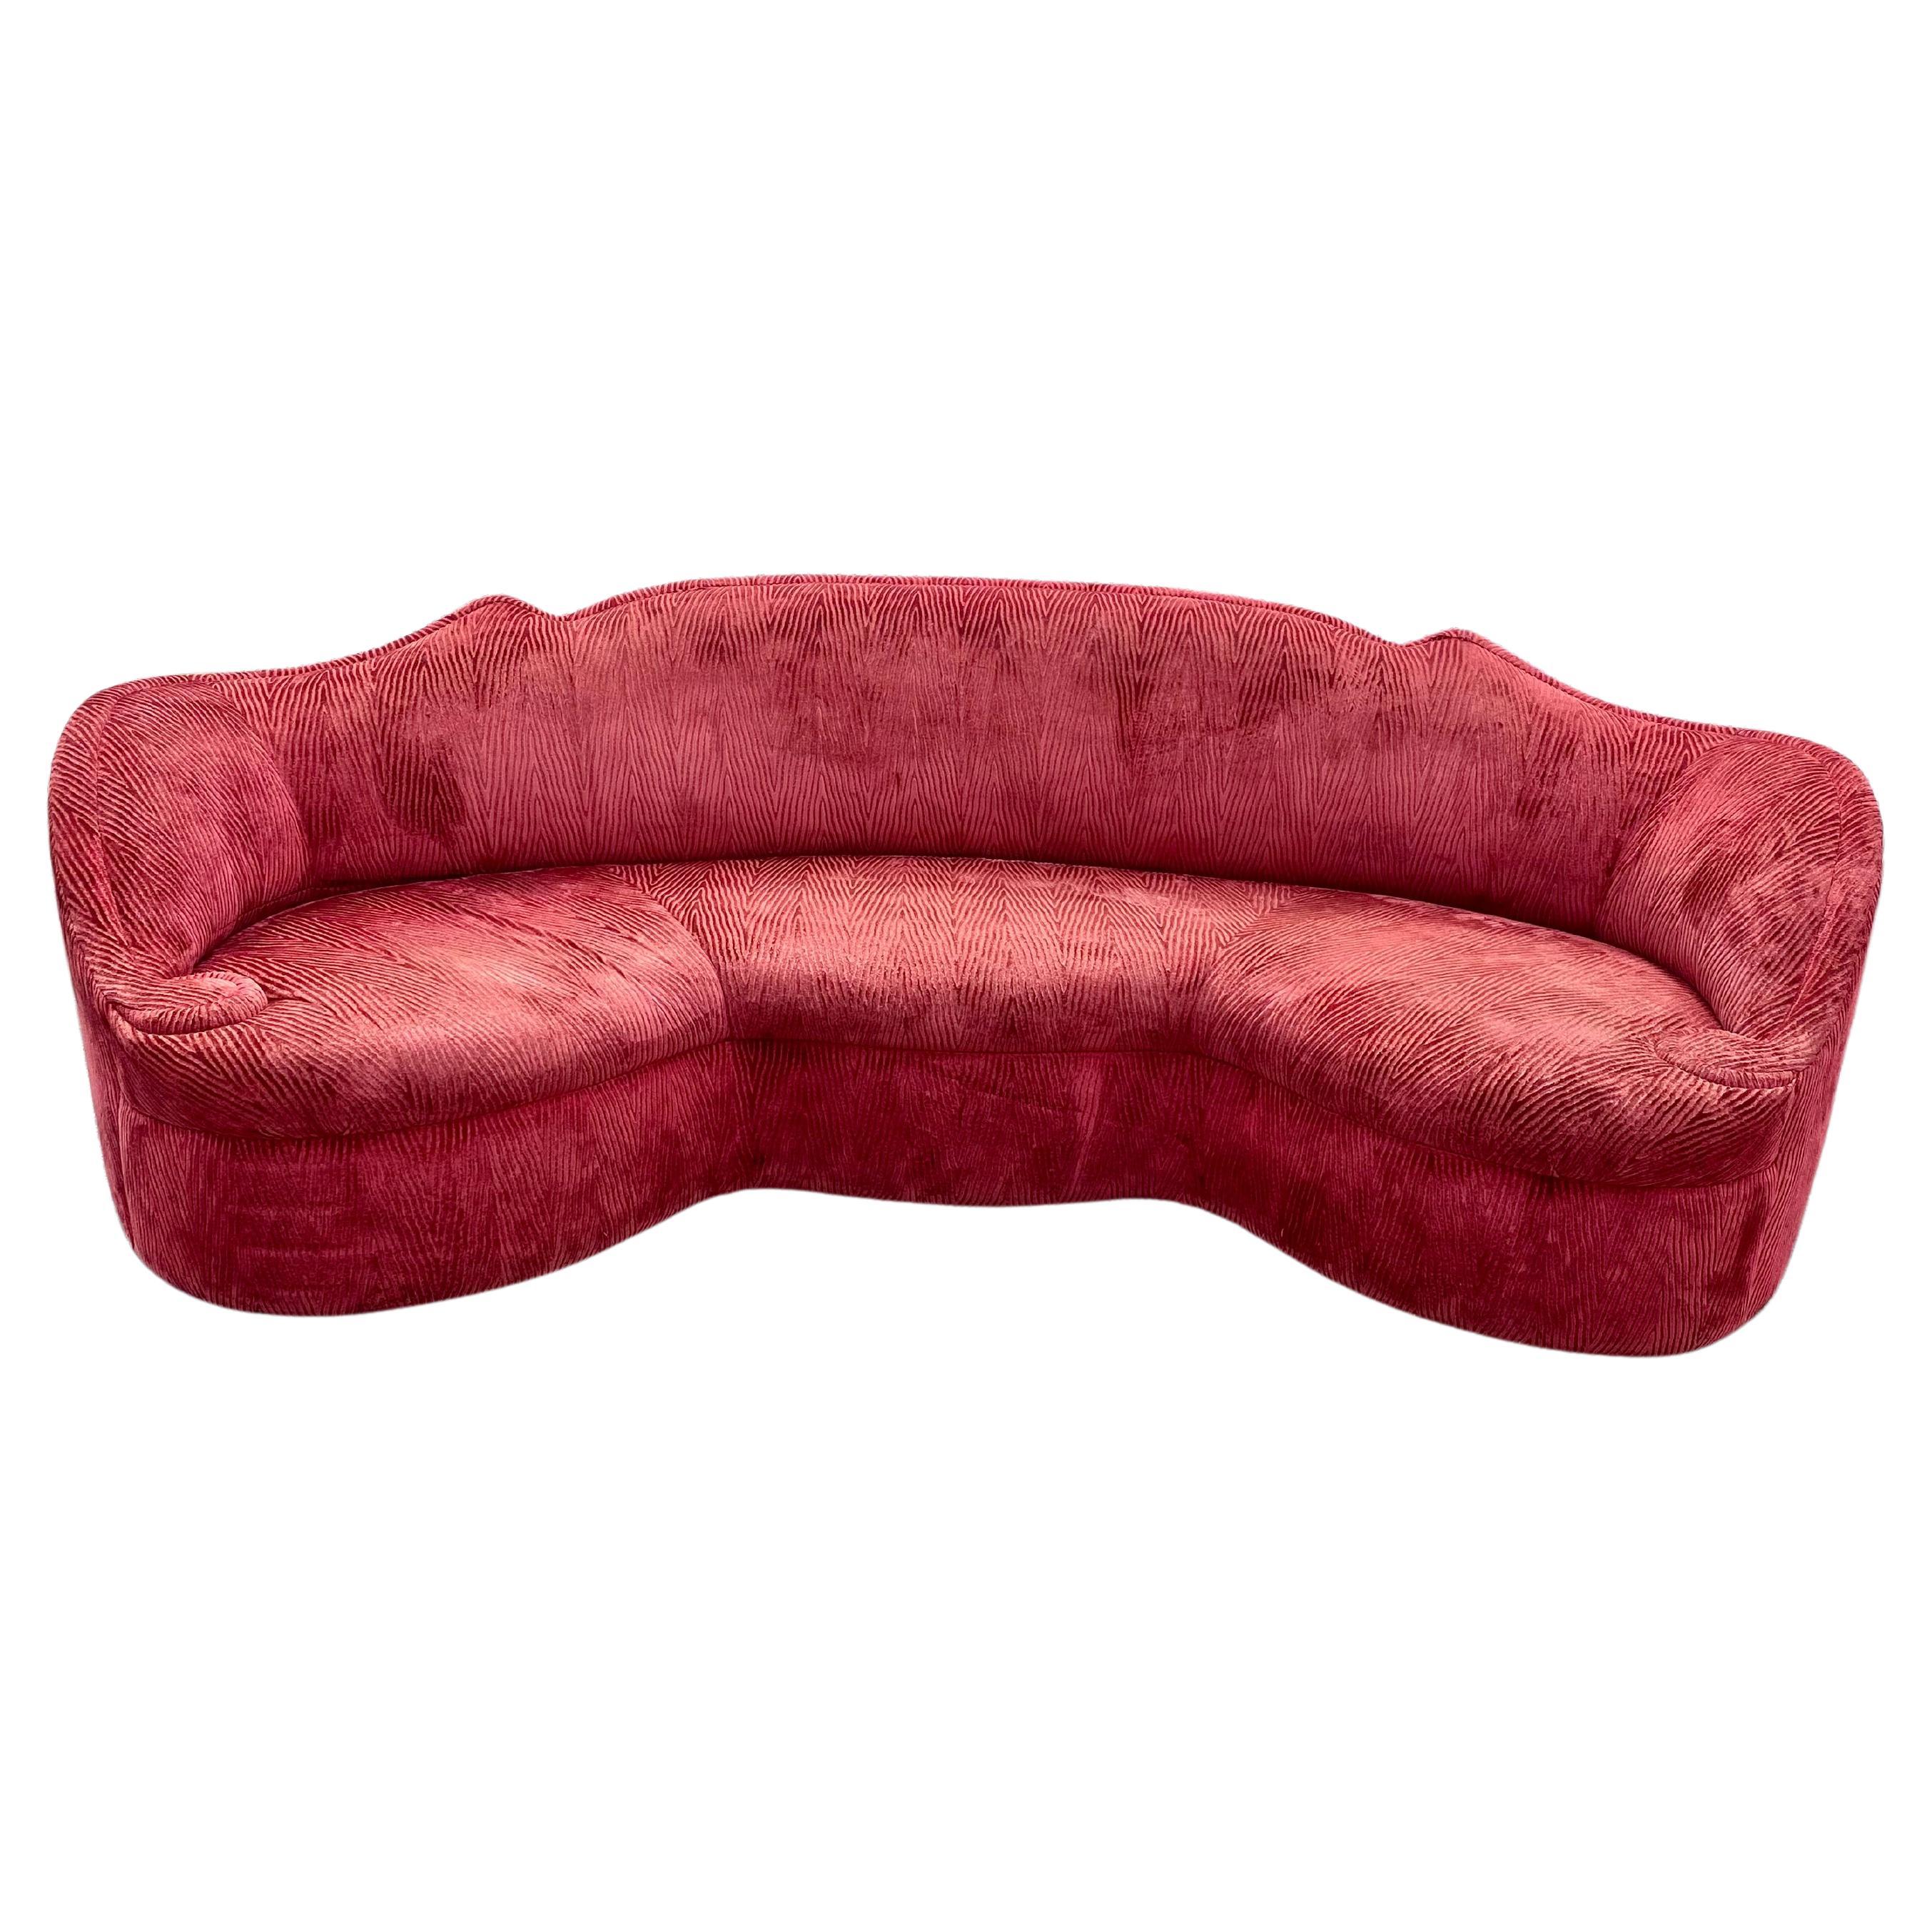 Monumentales Maroon Schiaparelli-Sofa aus geschwungenem Samt, 1970er Jahre